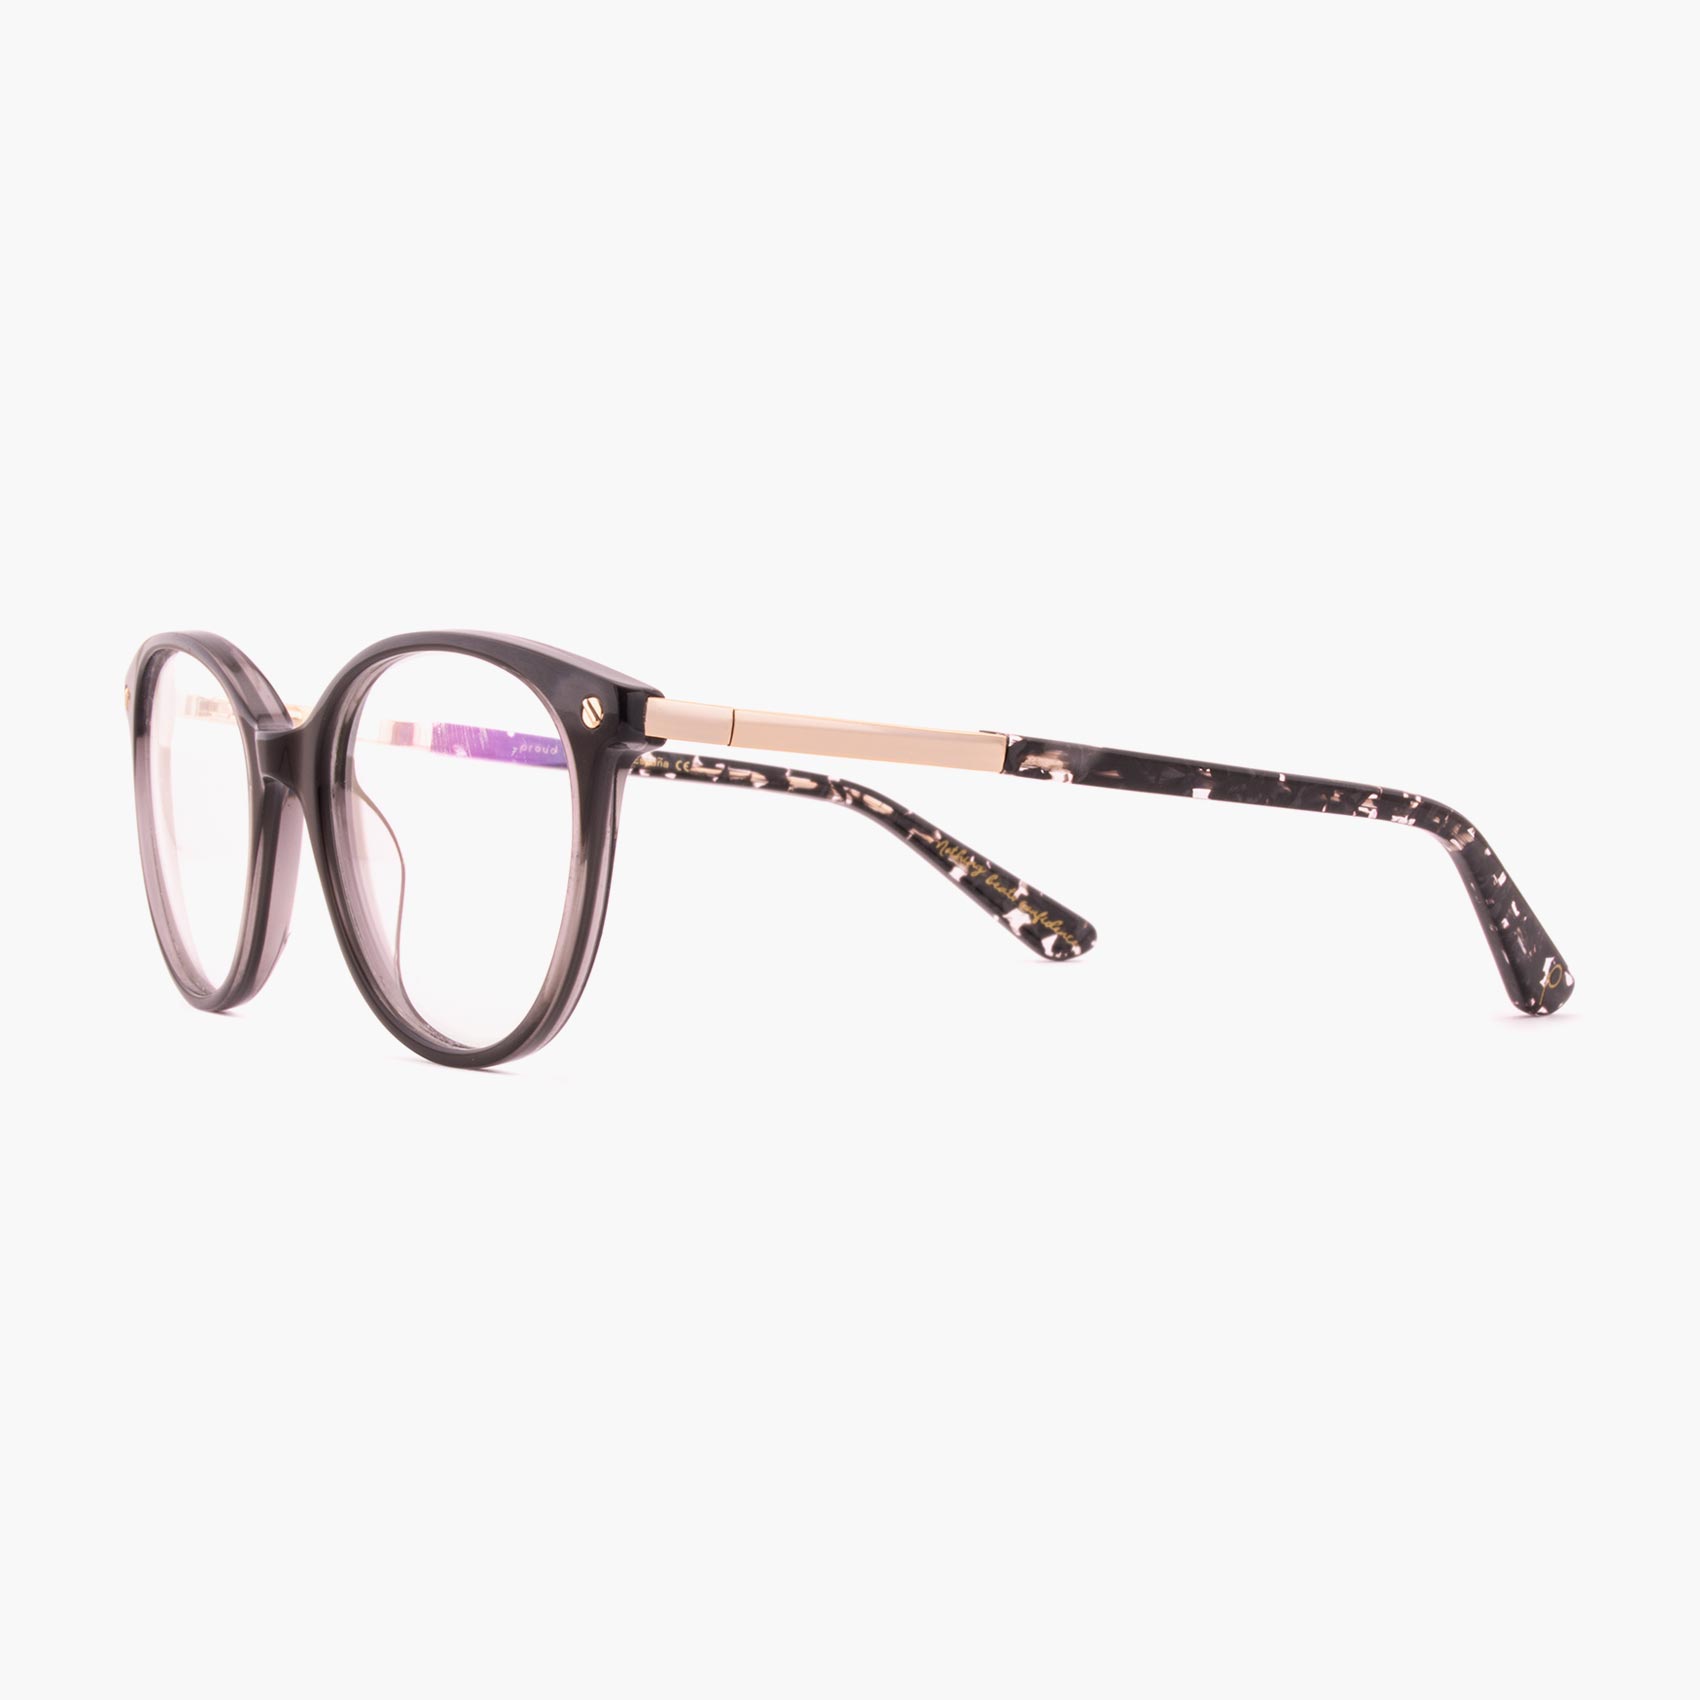 Proud eyewear Charlize C3 L frame glasses women responsible